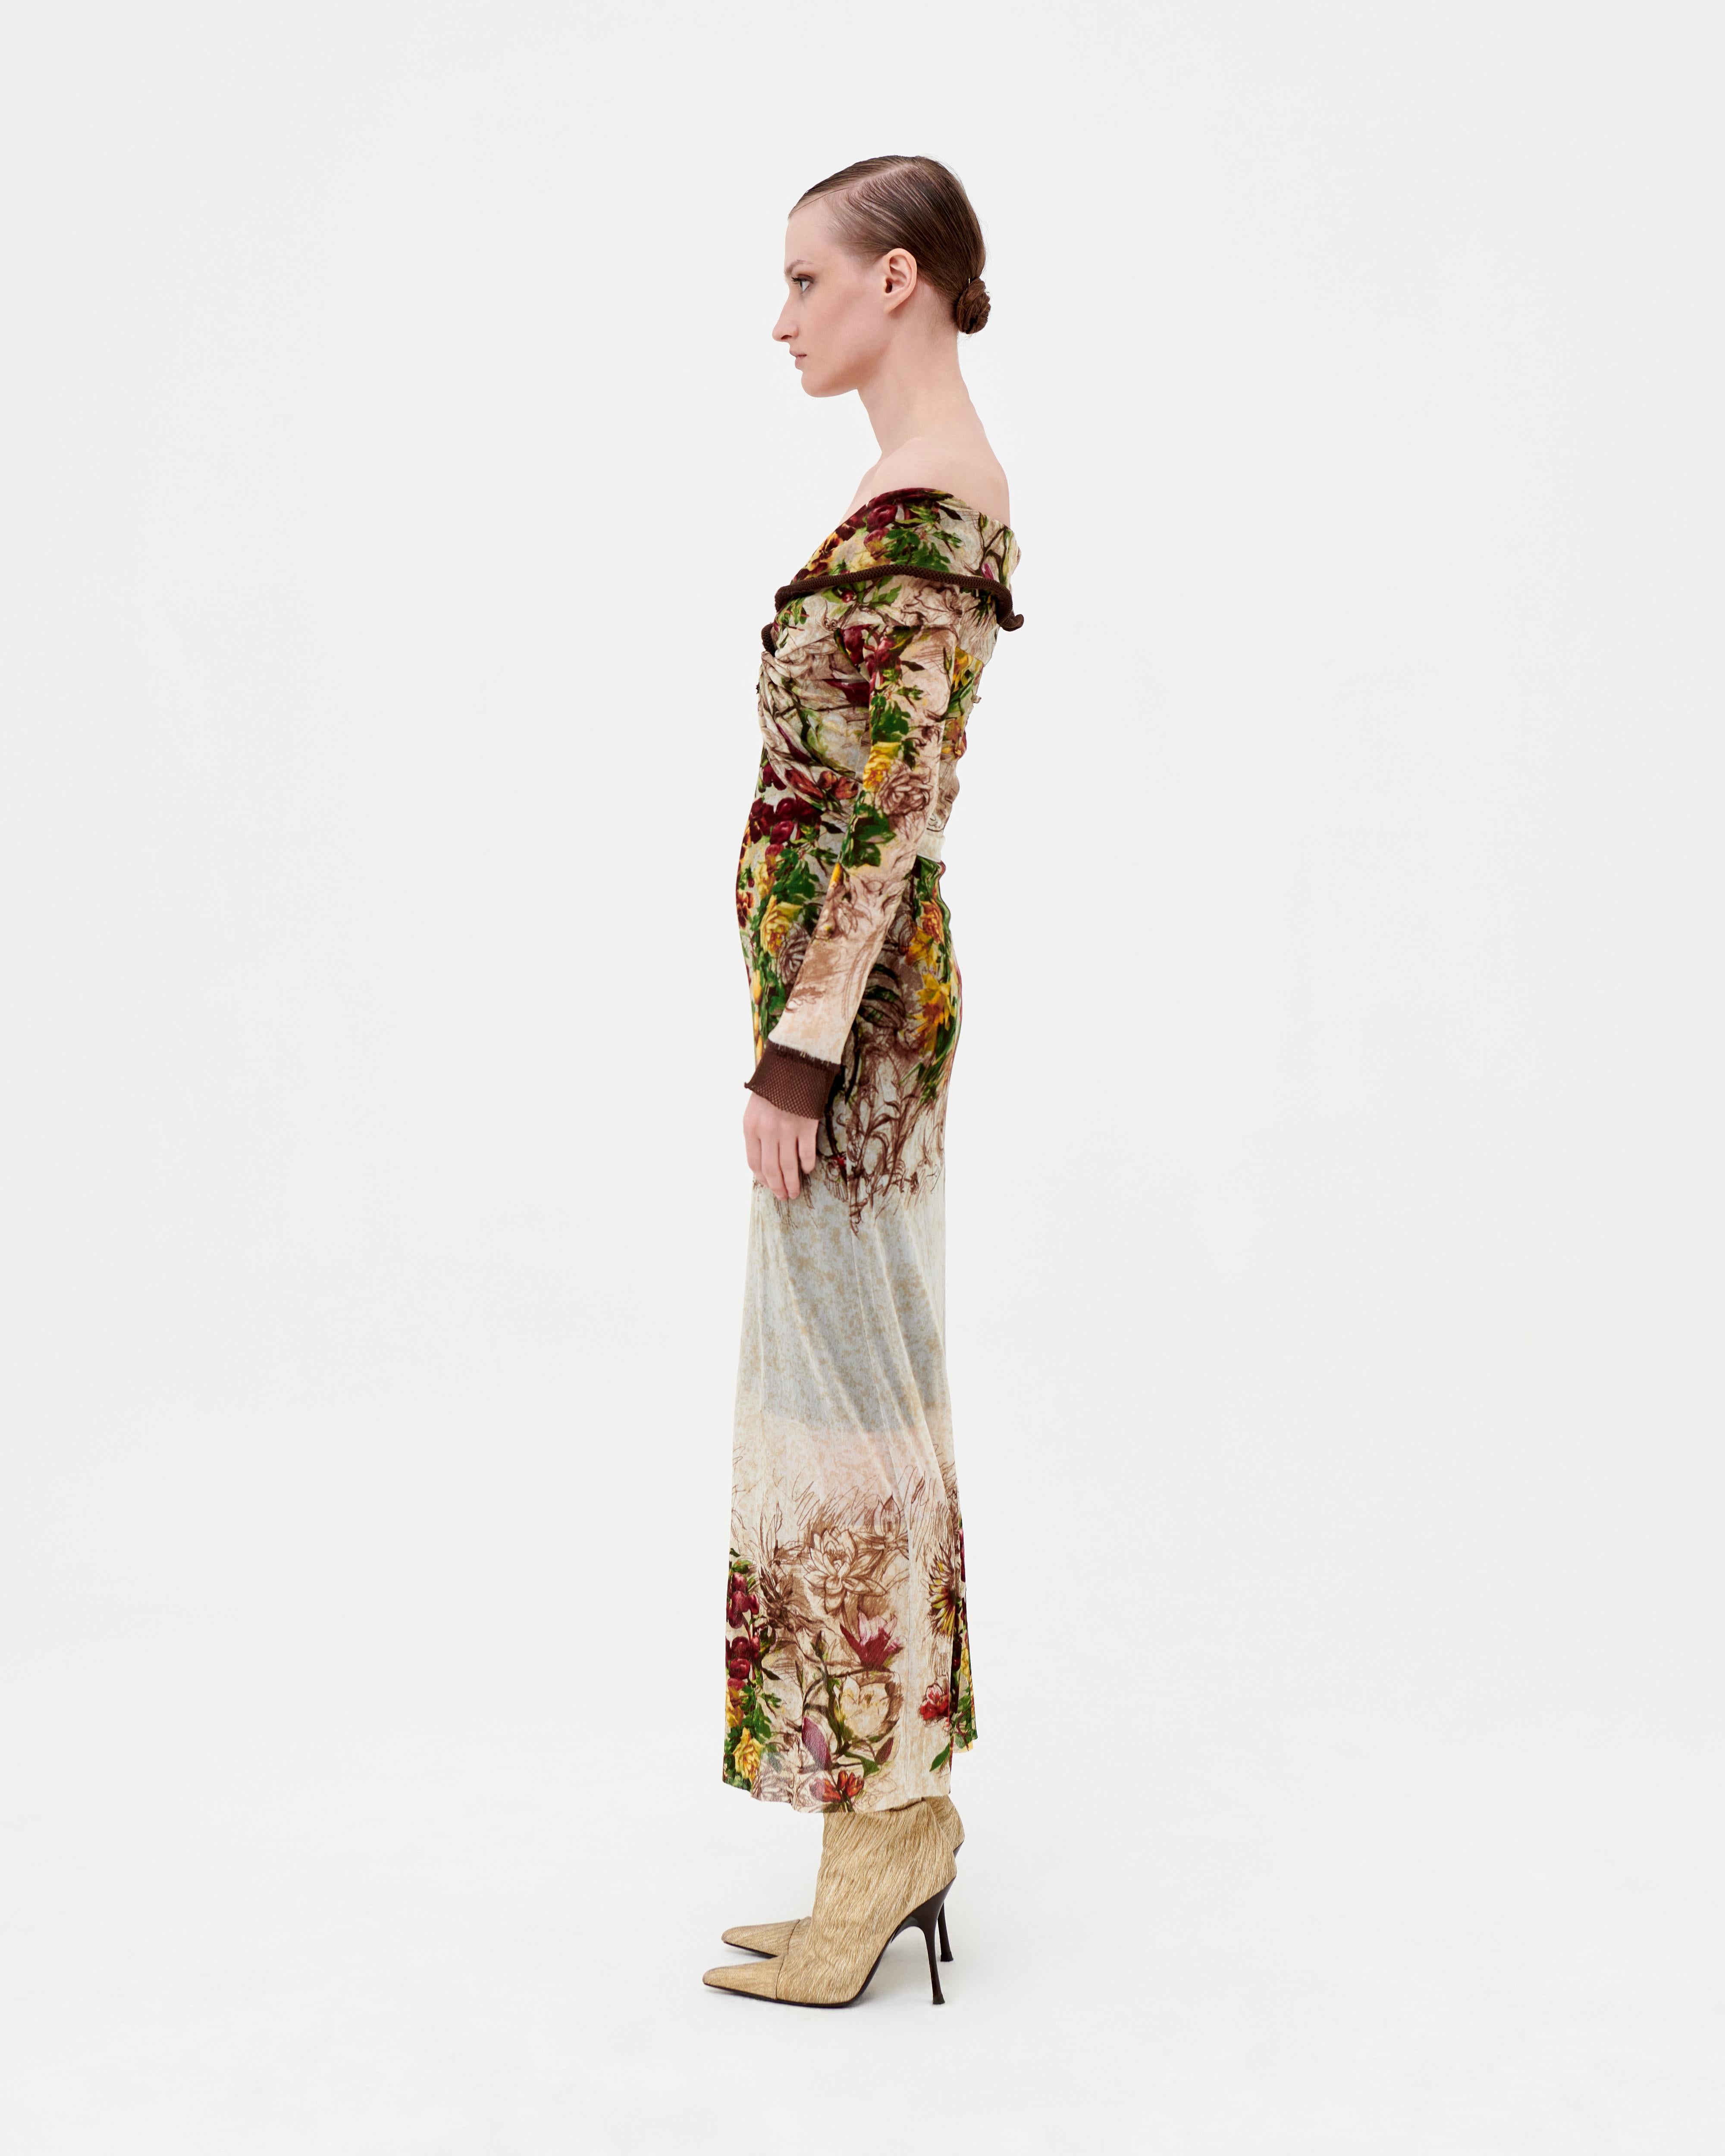 Beige Jean Paul Gaultier S/S 1999 runway floral dress For Sale